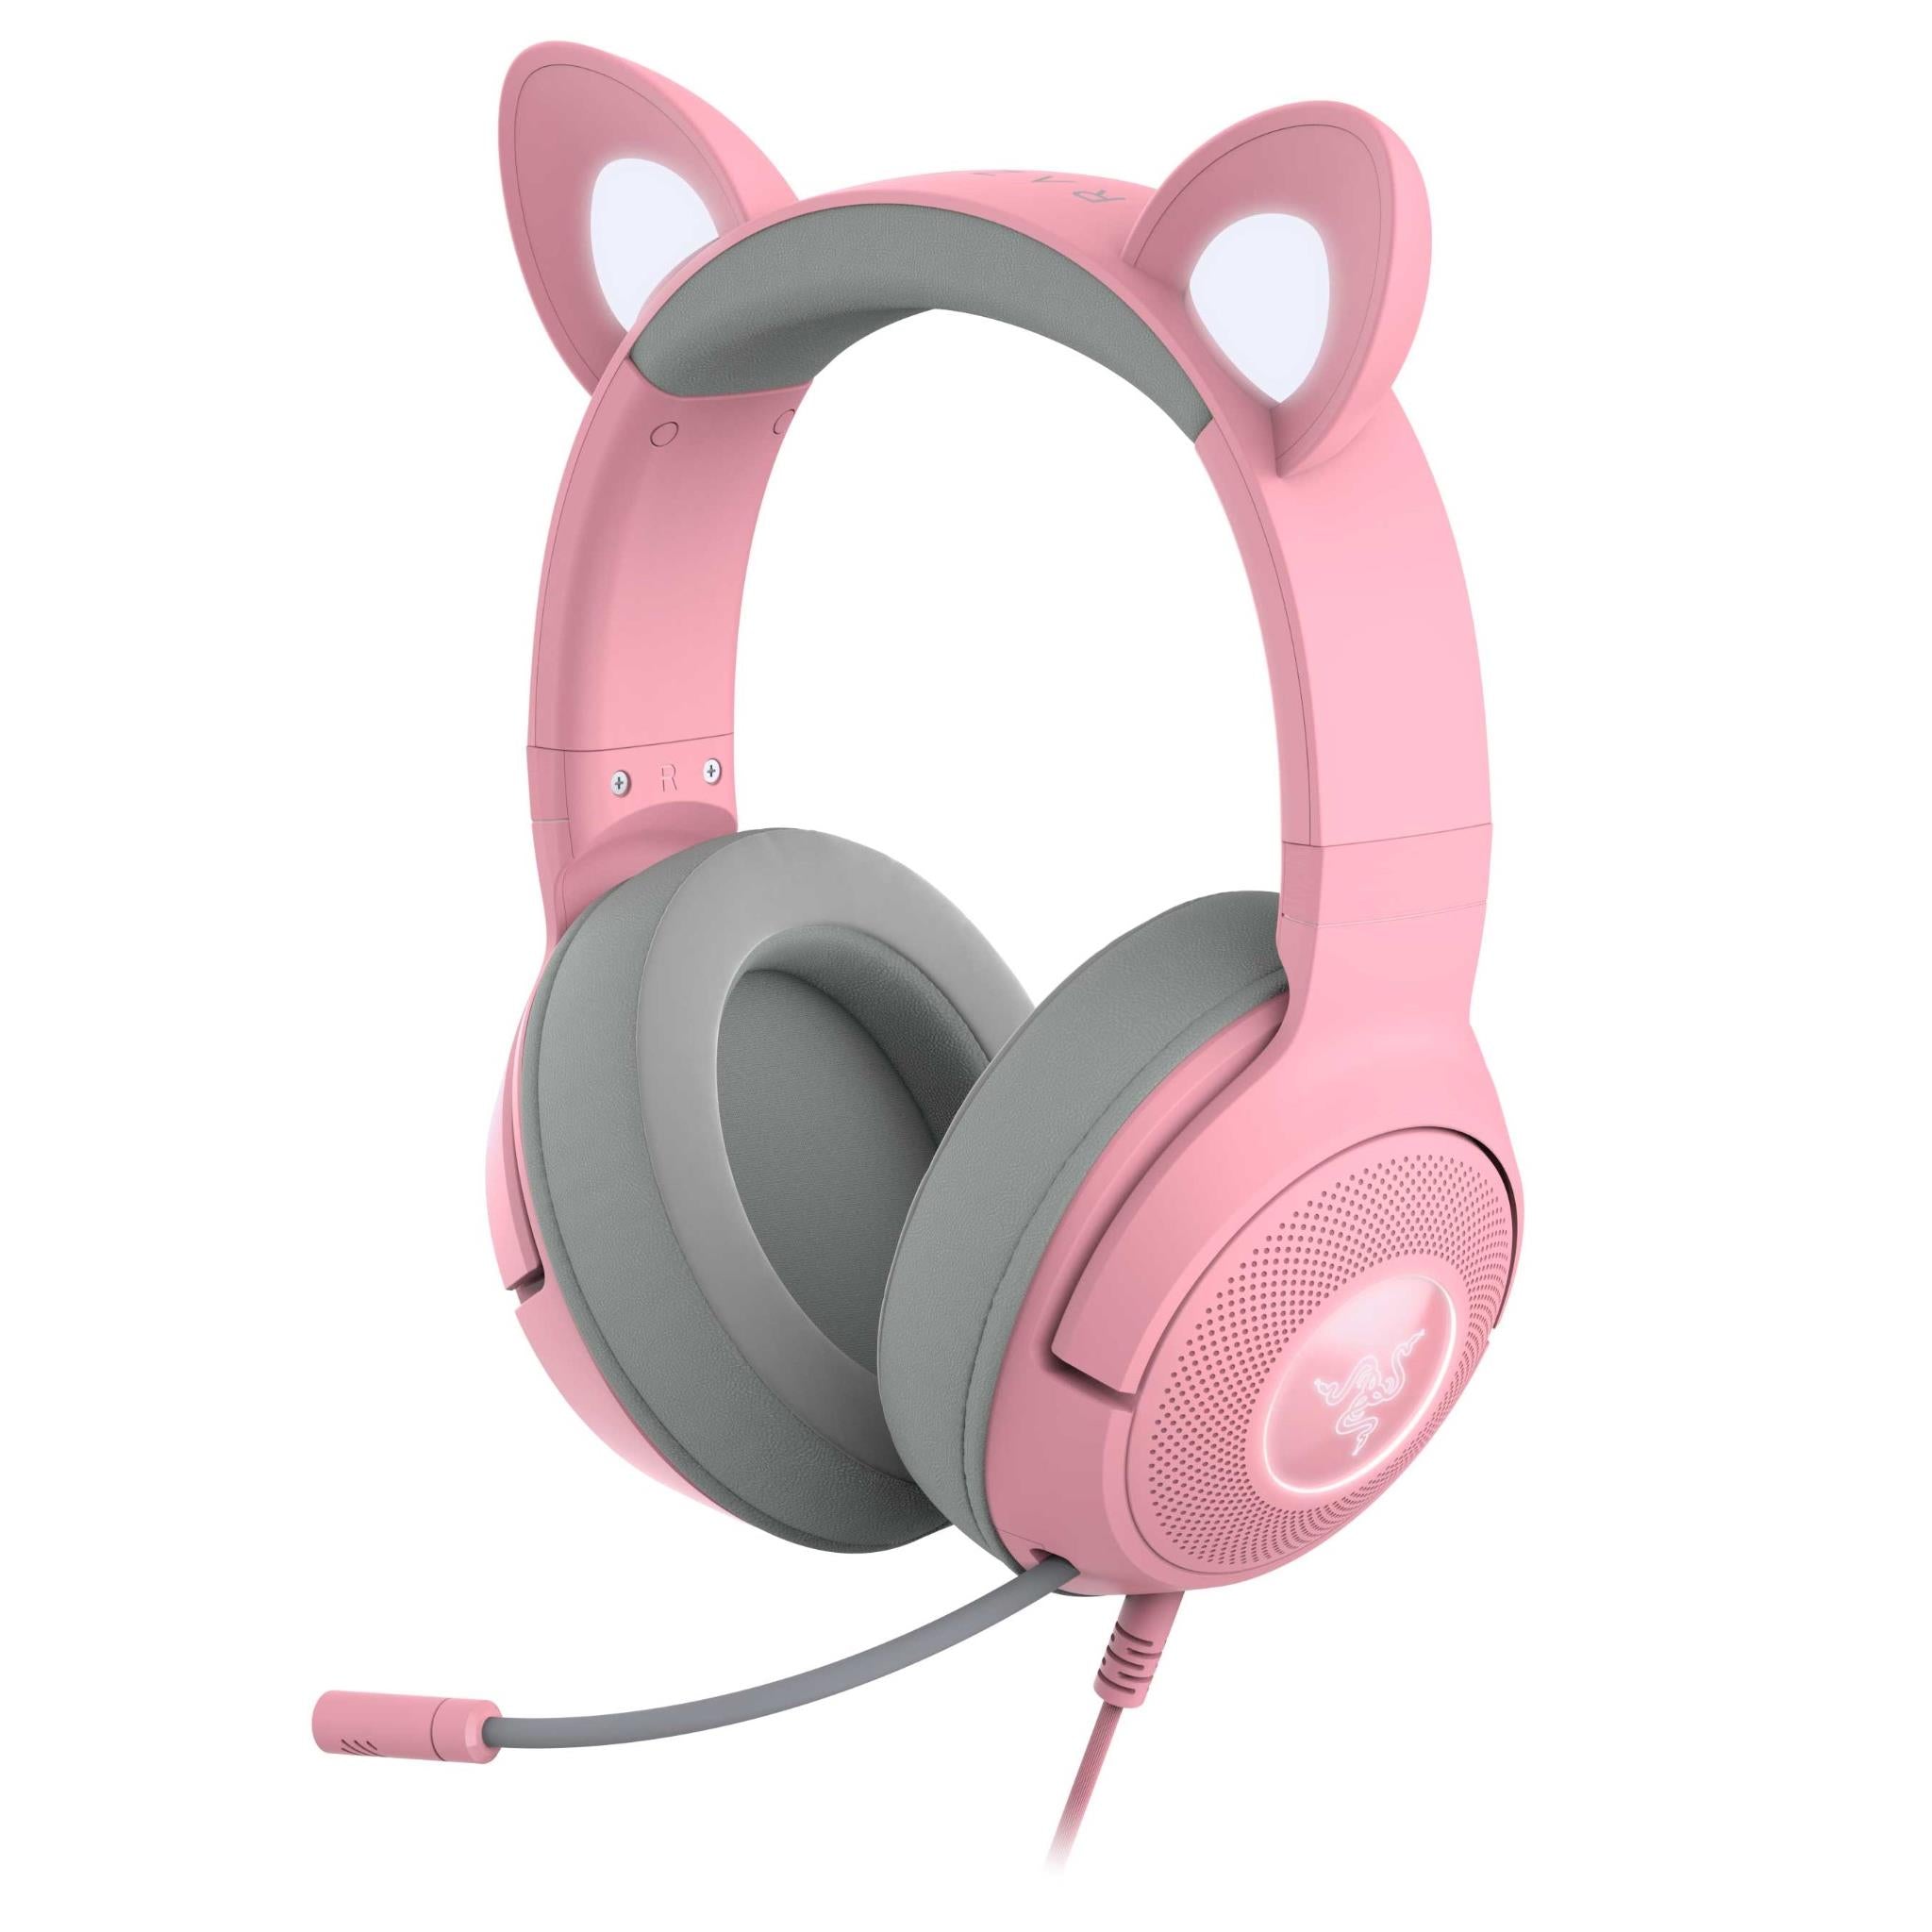 razer kraken kitty v2 pro wired rgb headset with interchangeable ears (quartz edition)